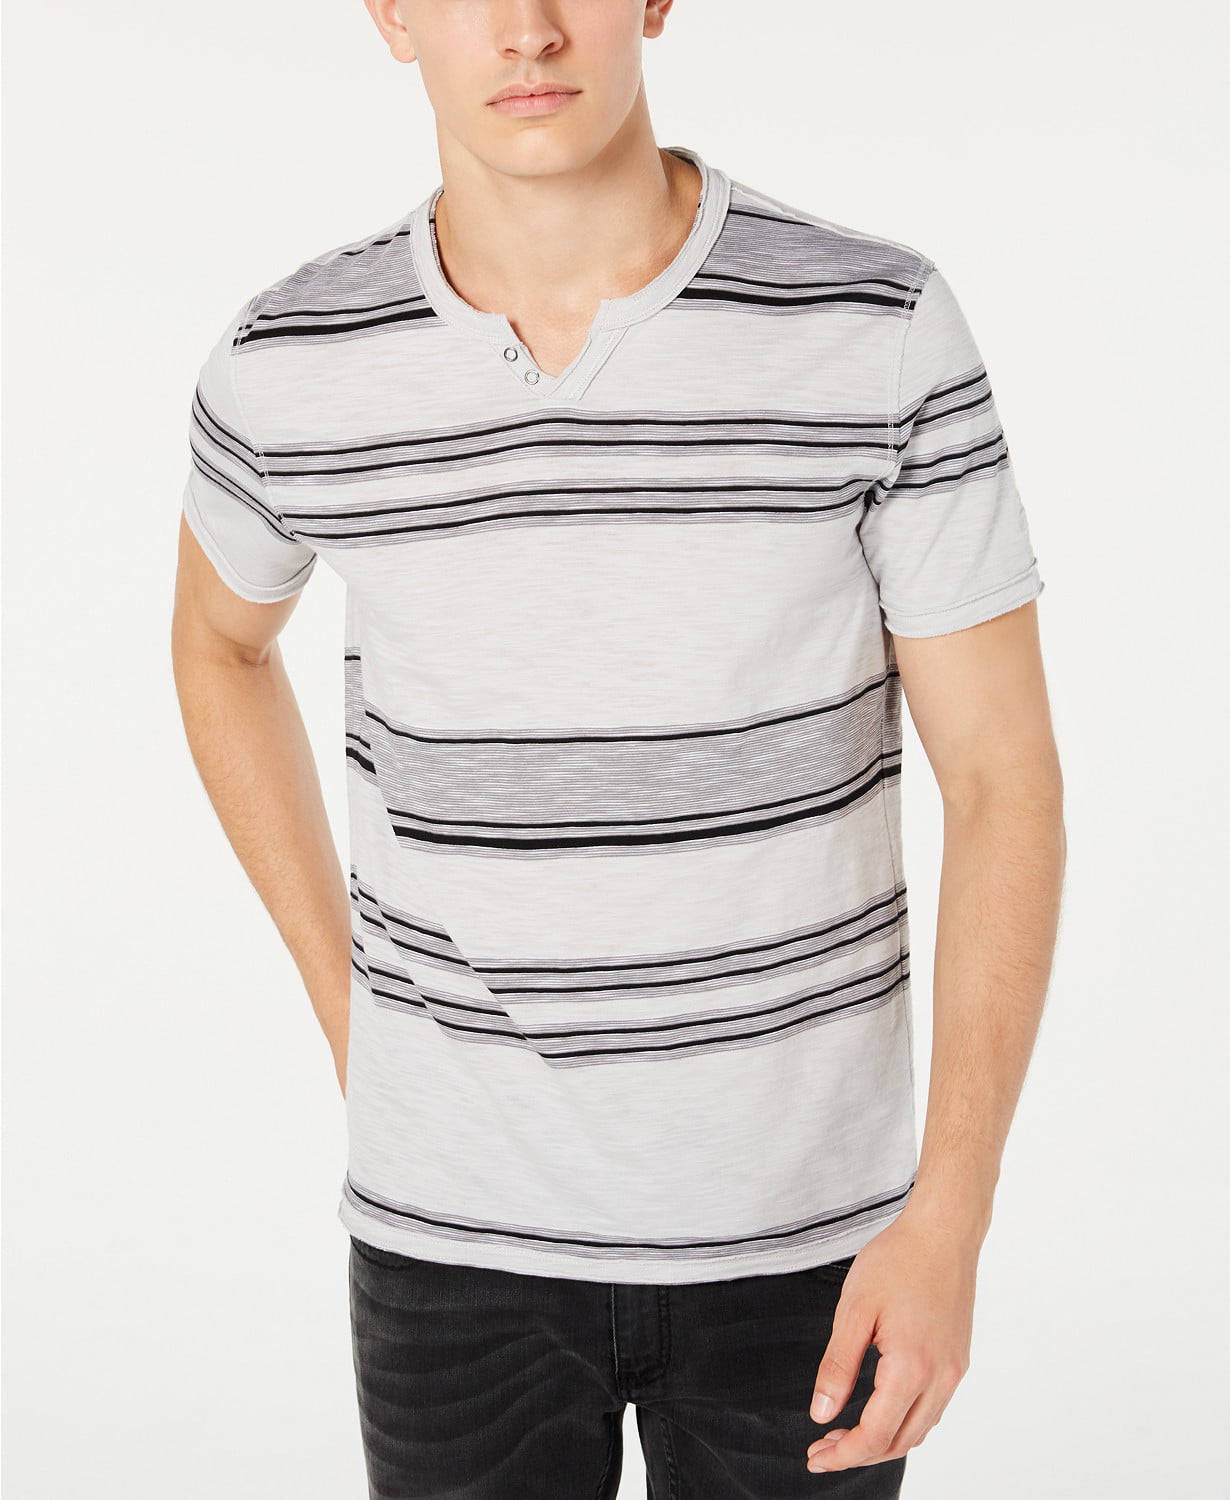 I-N-C Mens Stripes Inside Stripes Basic T-Shirt 